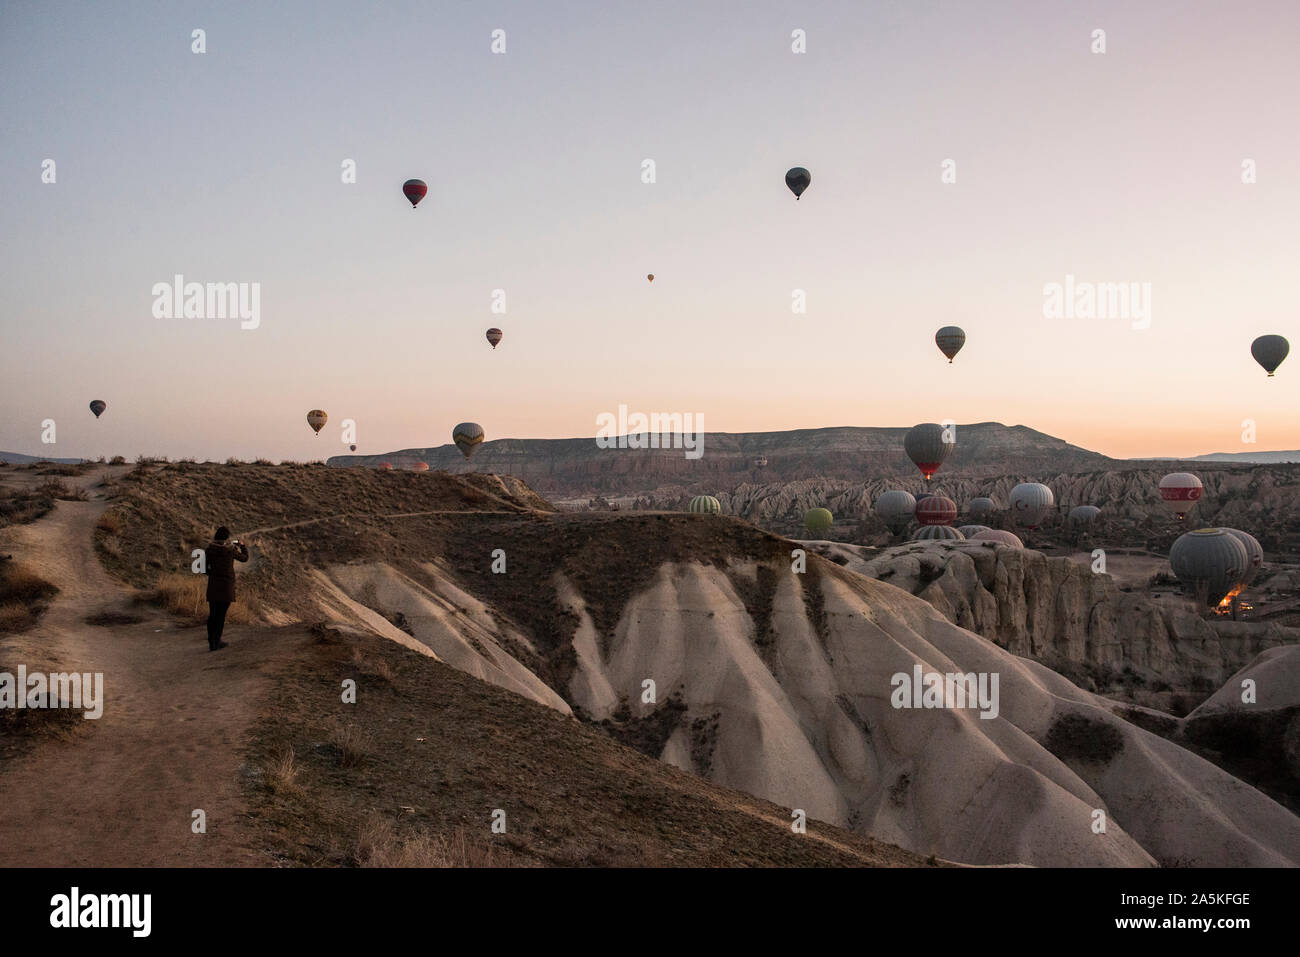 Woman enjoying view and display of hot air balloons in valley, Göreme, Cappadocia, Nevsehir, Turkey Stock Photo